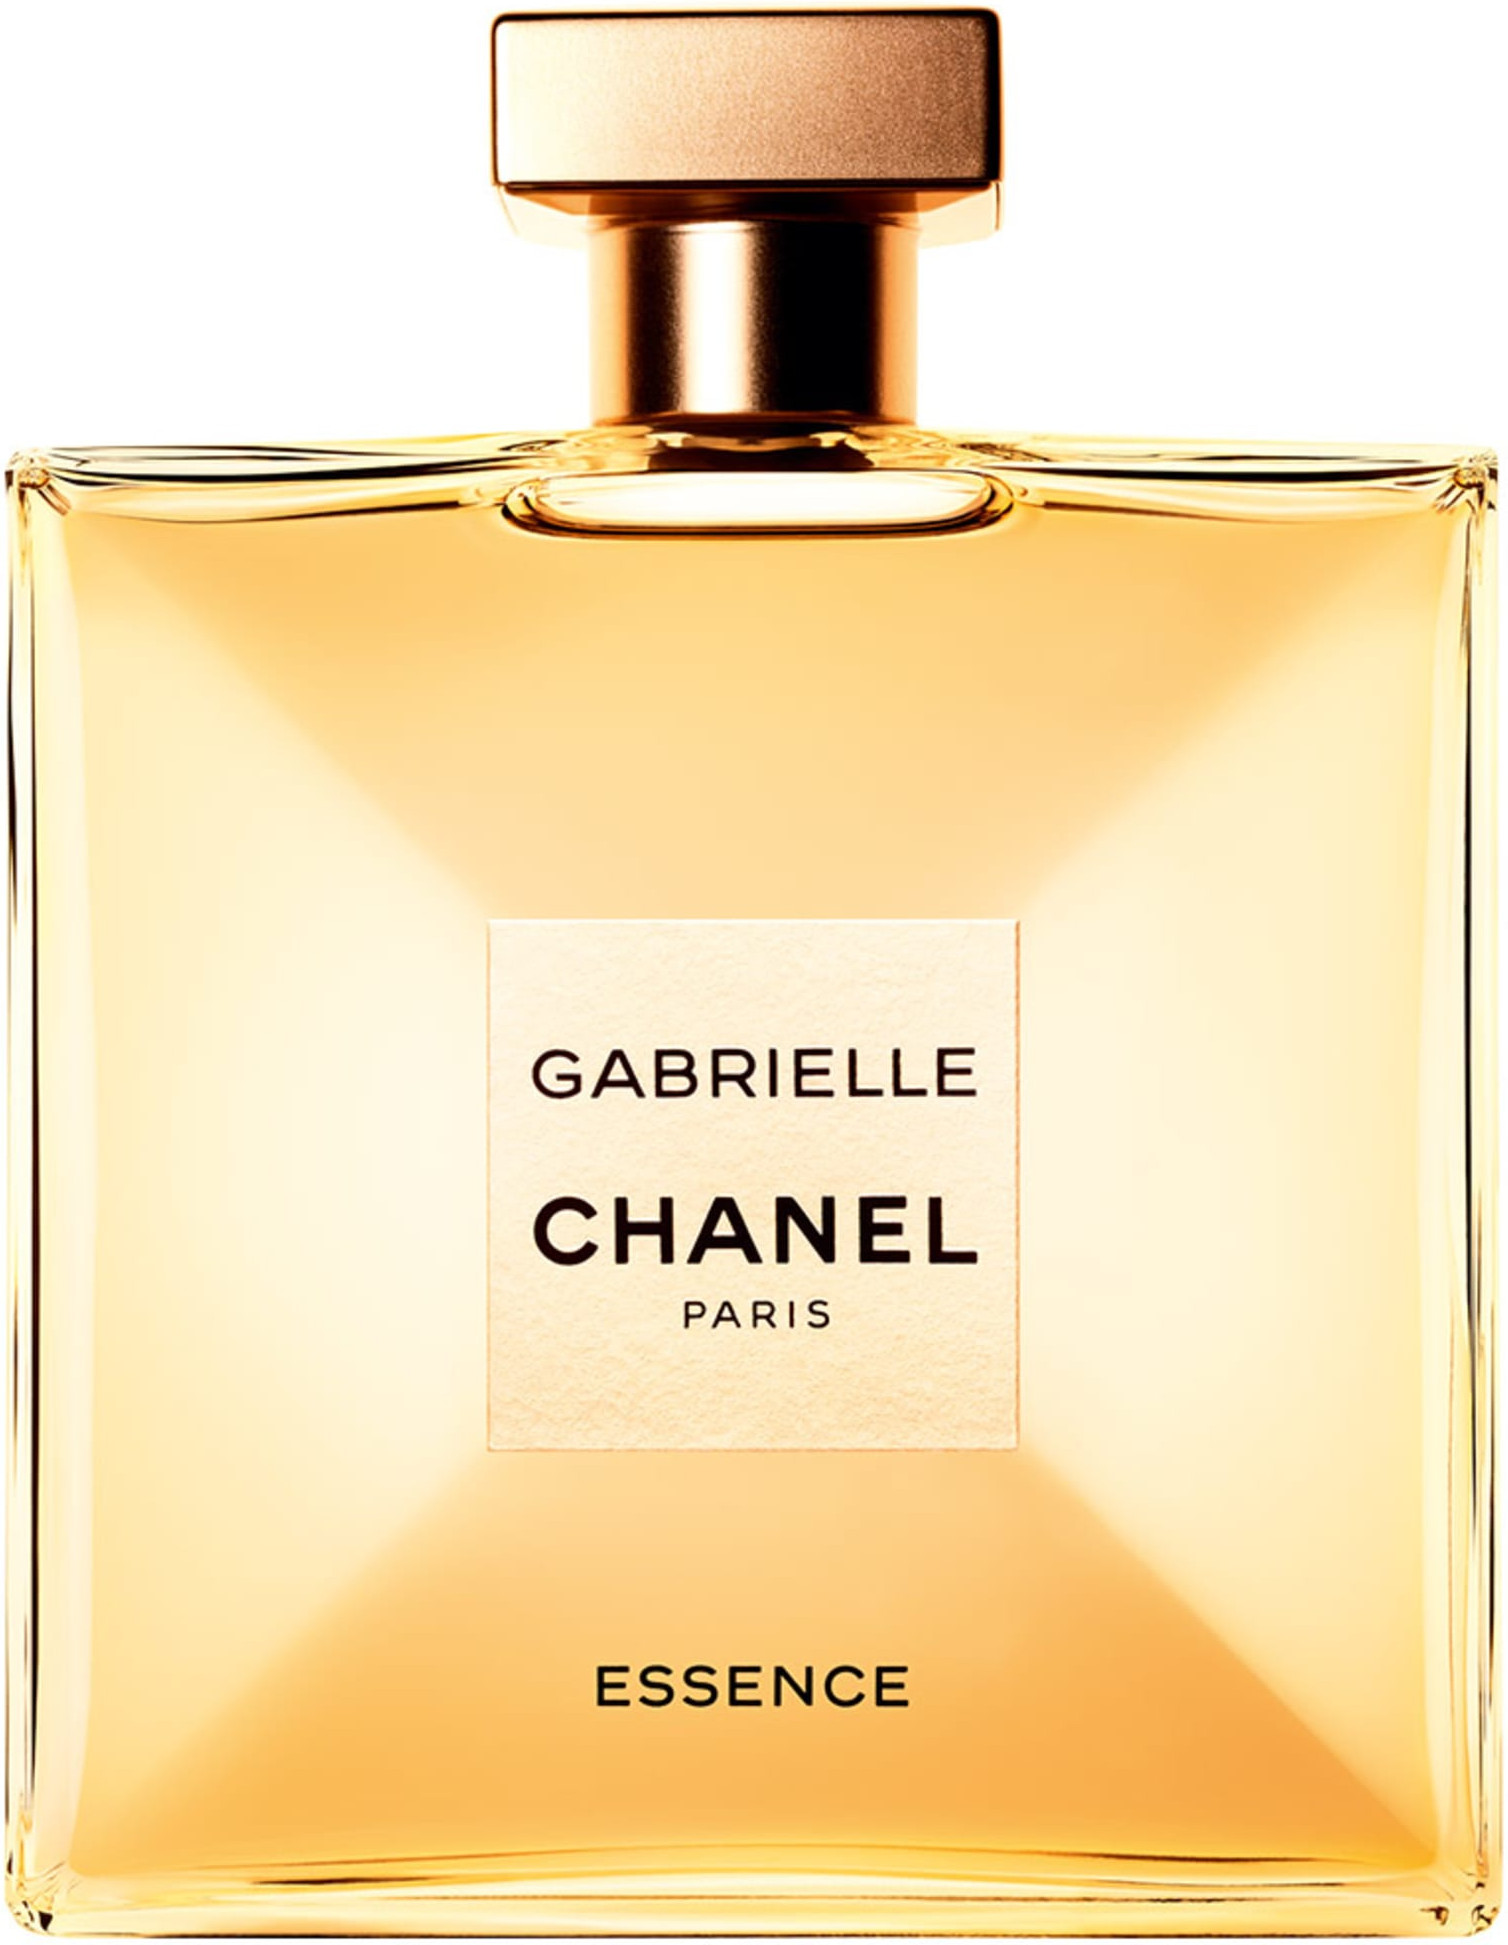 Шанель габриэль эссенс. Chanel Gabrielle 100ml. Gabrielle Essence 100 мл. Эссенс духи Шанель.